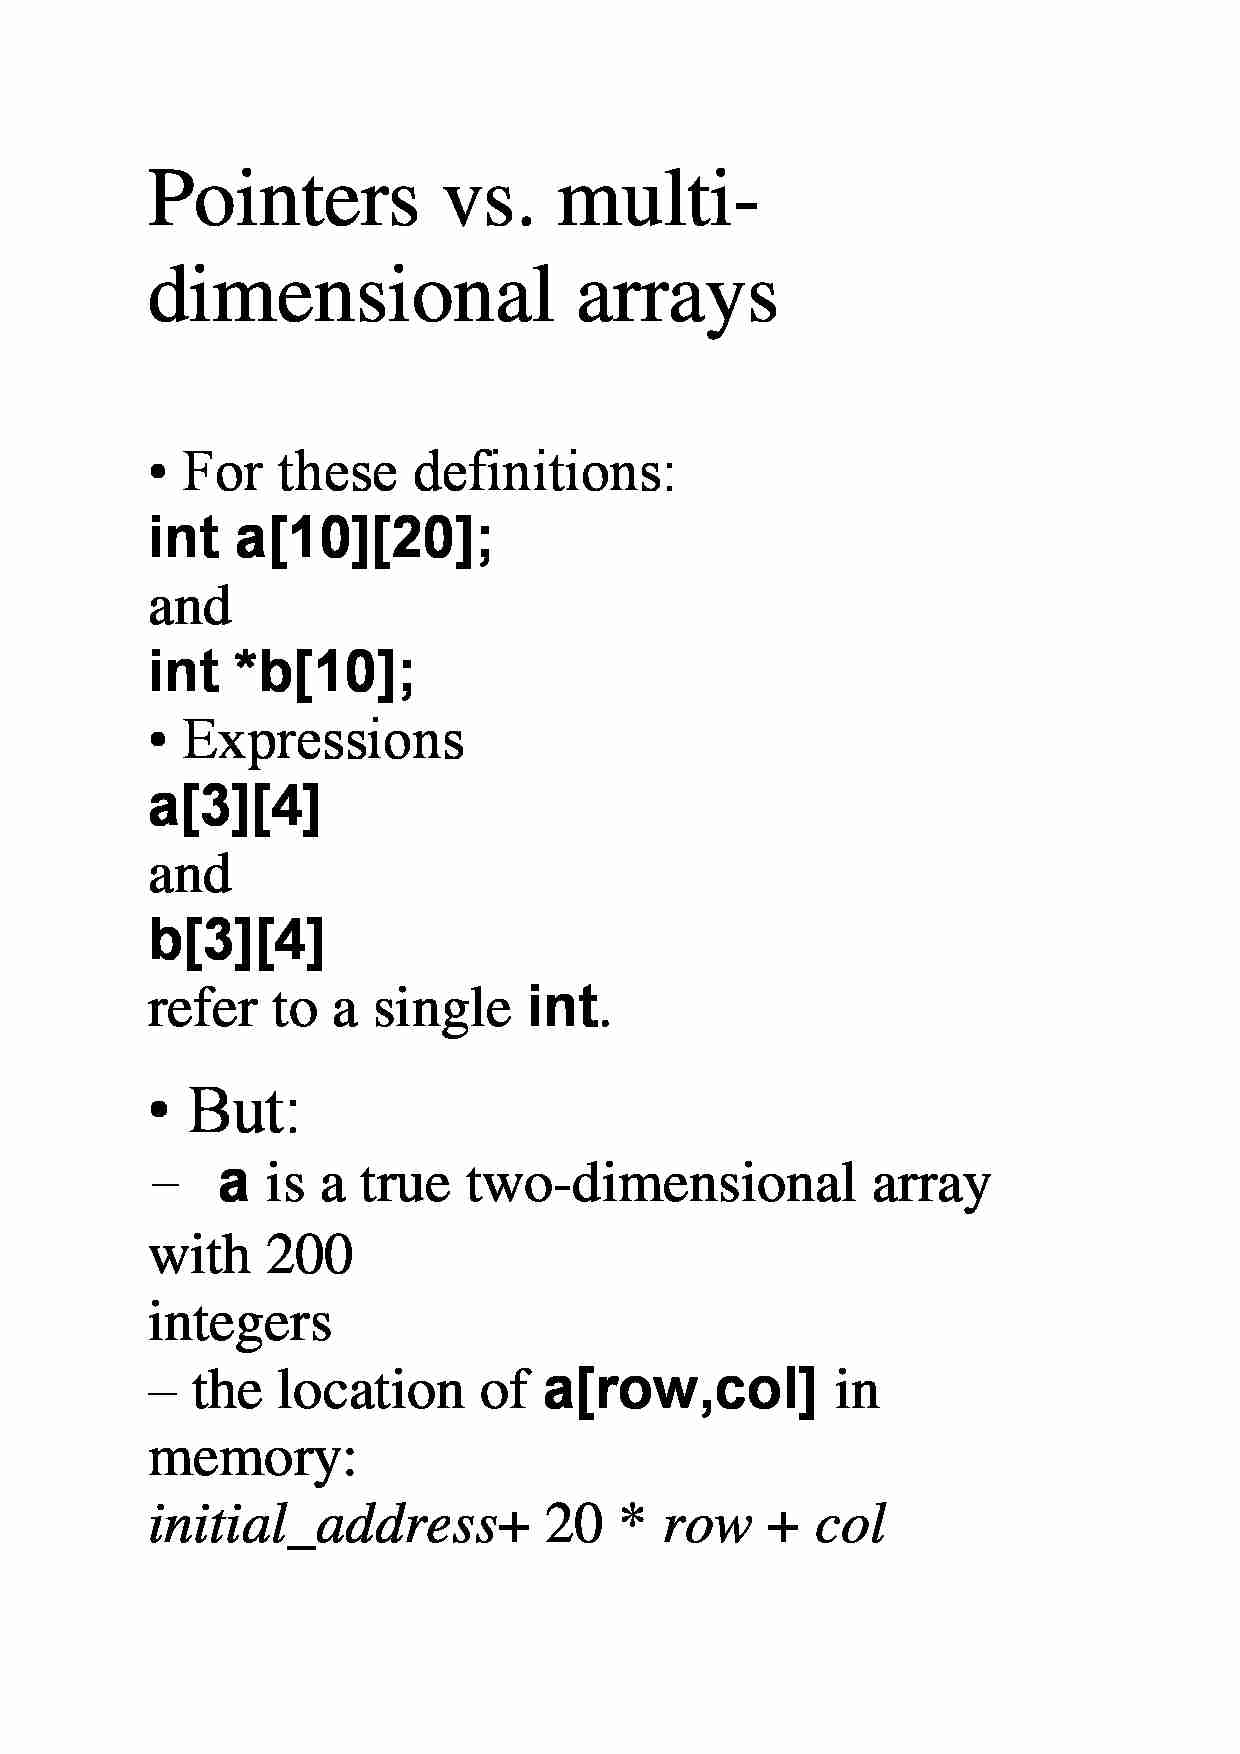 Pointers vs multidimensional arrays - strona 1